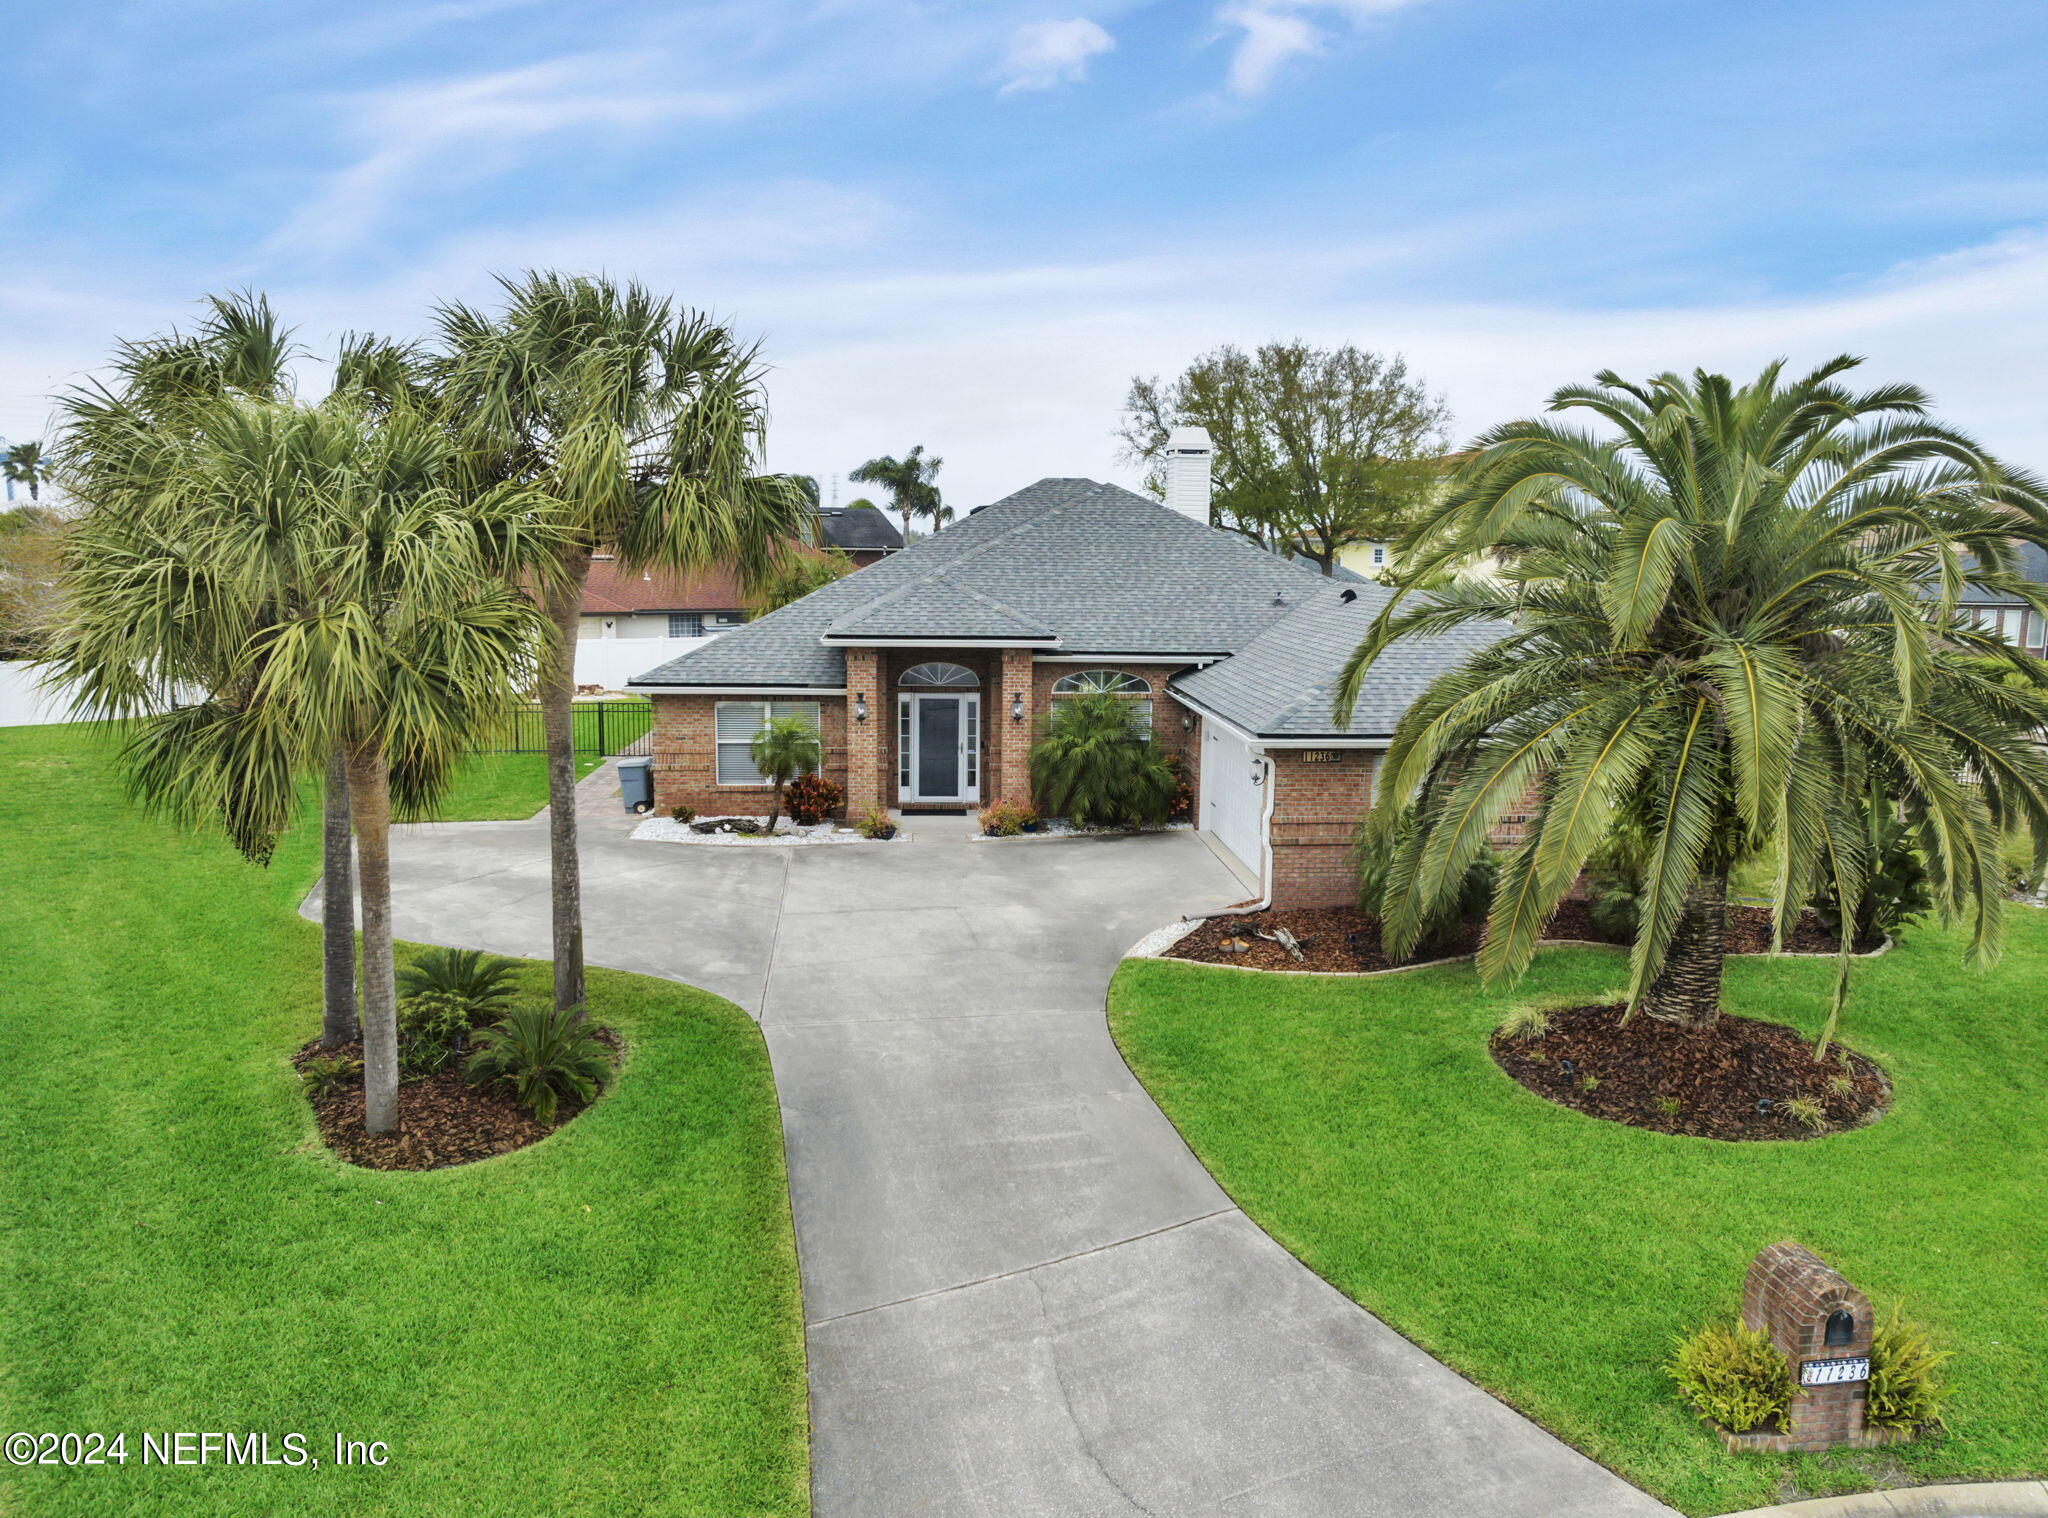 Jacksonville, FL home for sale located at 11236 Island Club Lane, Jacksonville, FL 32225